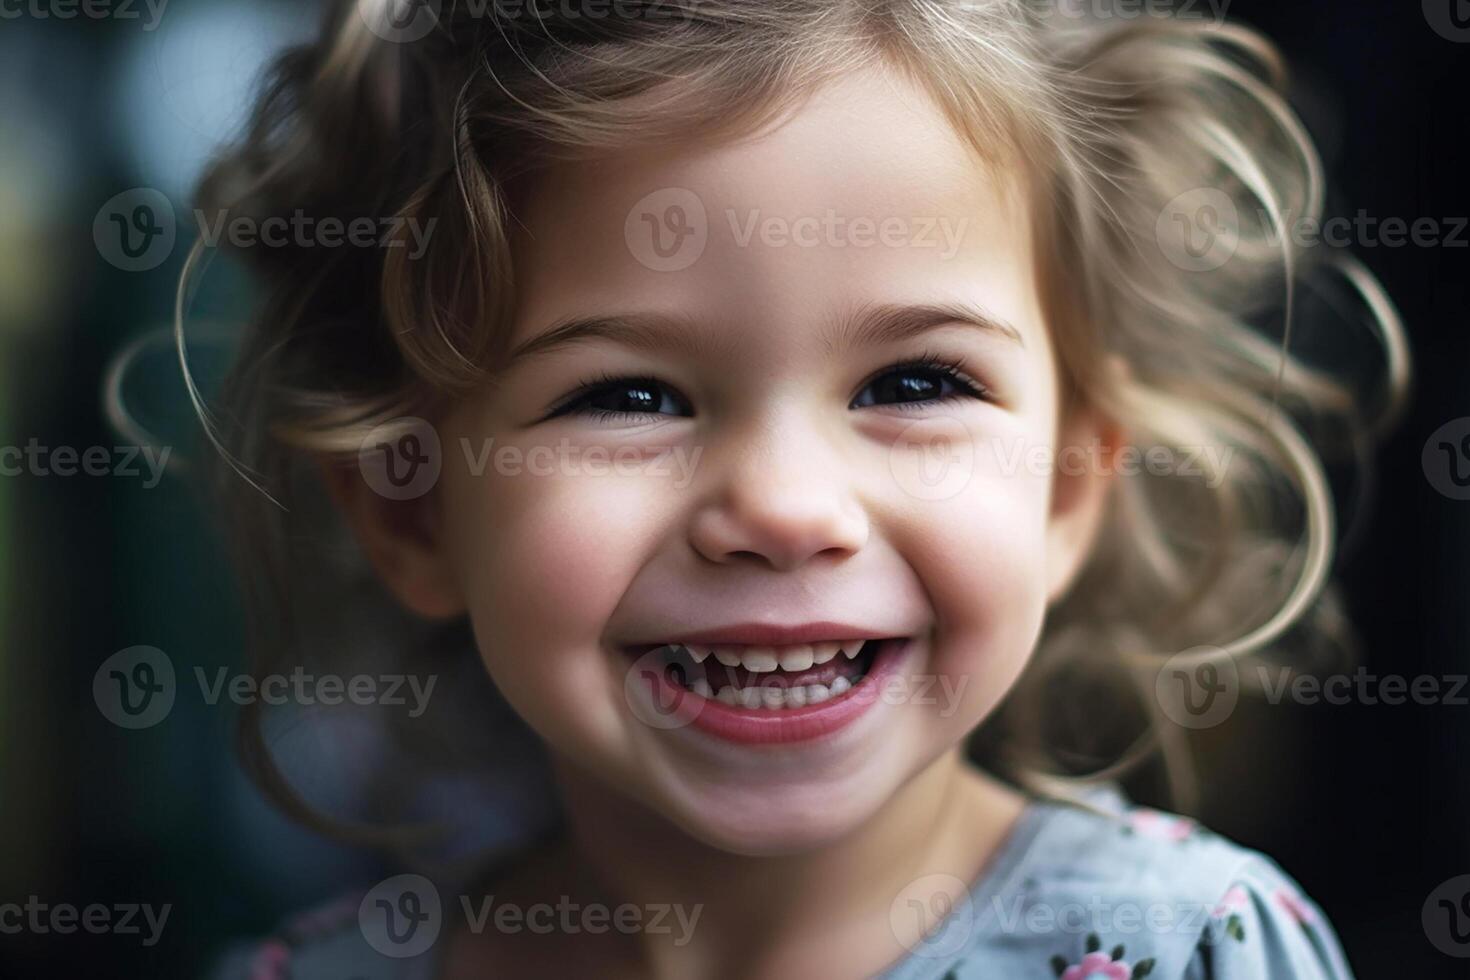 Portrait of a joyful smiling little girl. photo